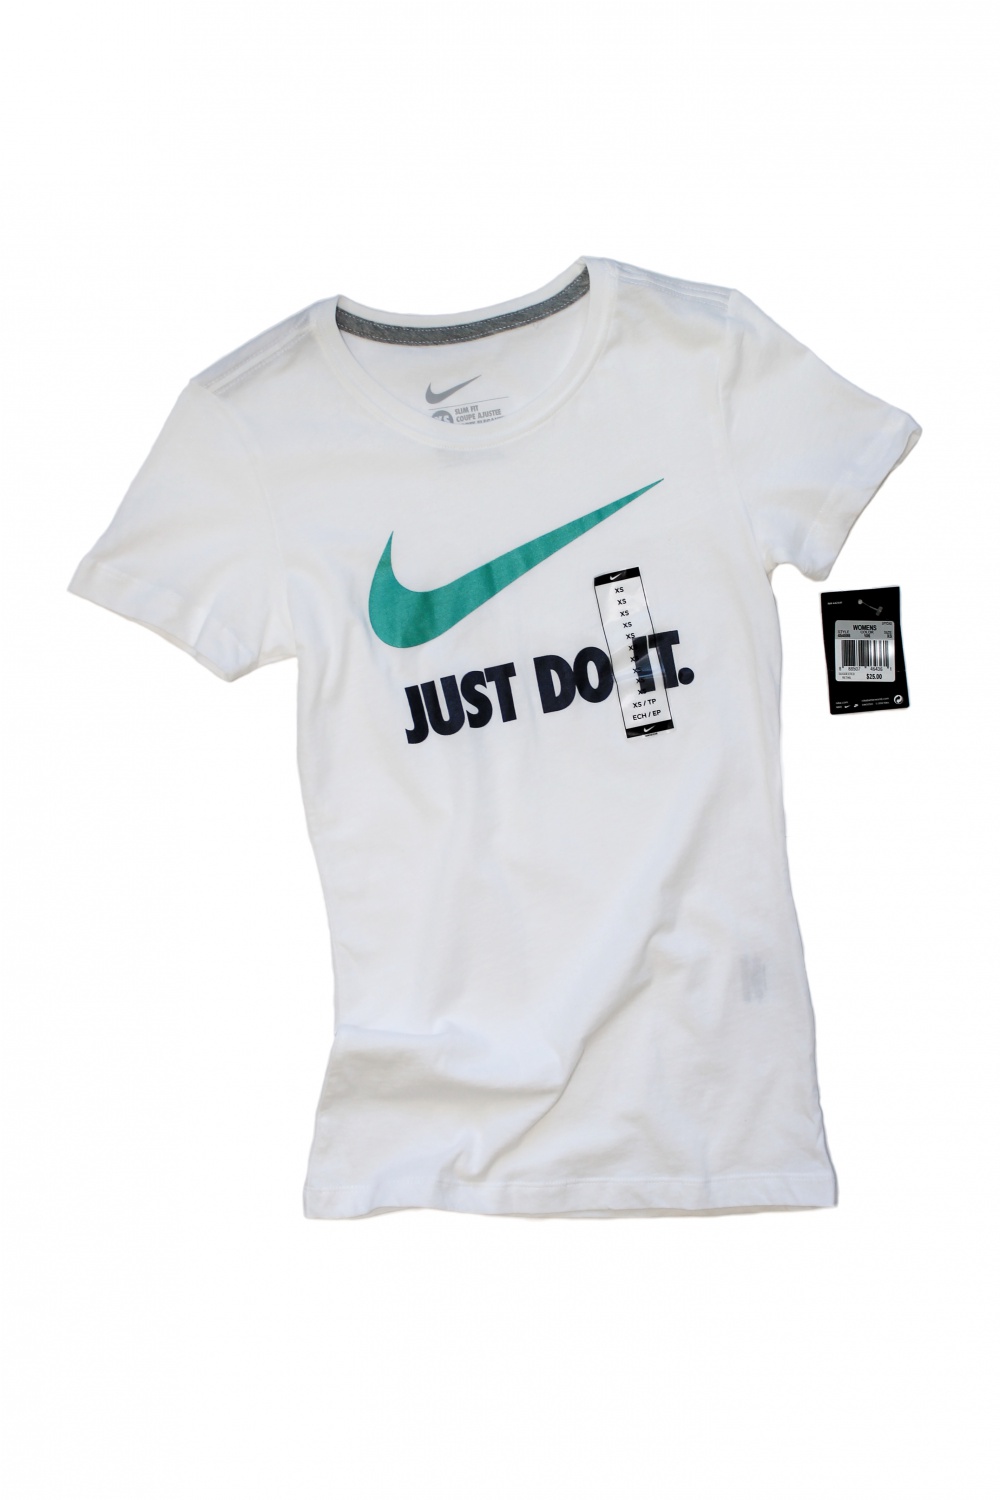 Спортивная футболка Nike, размер XS